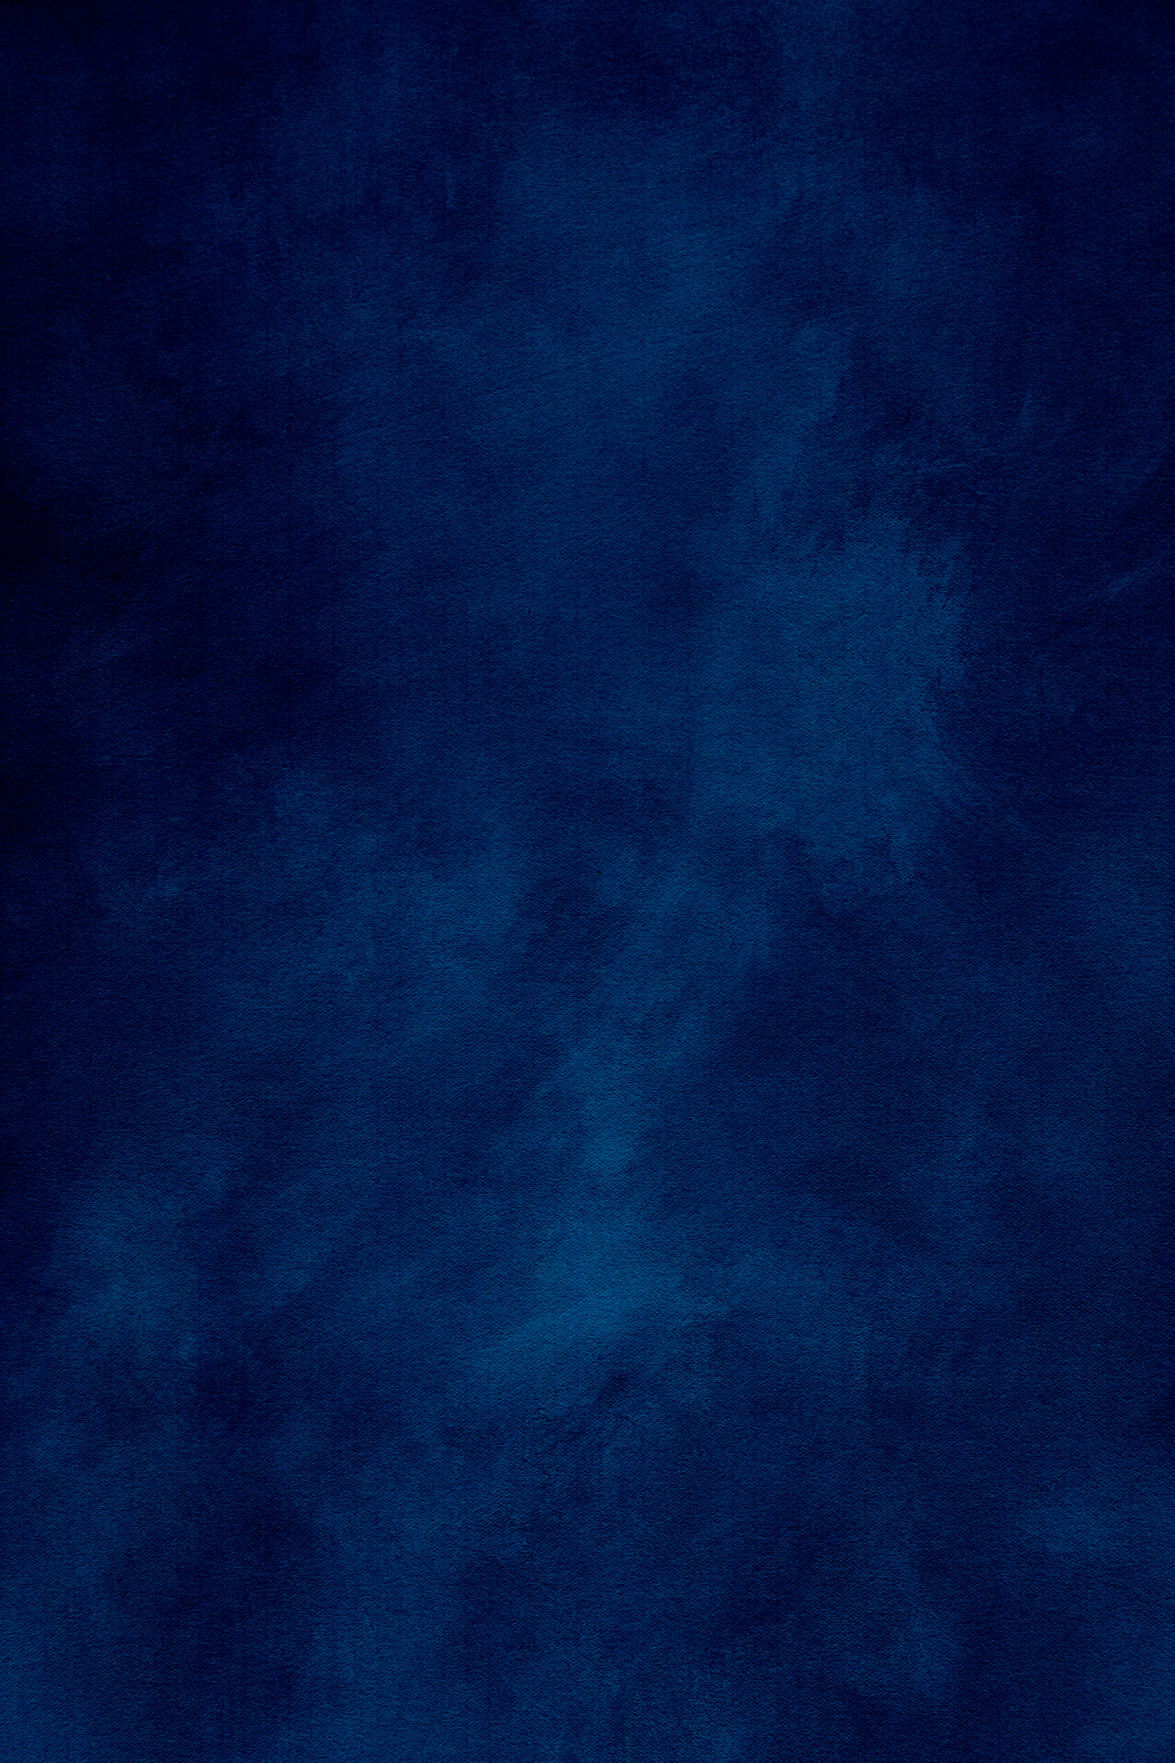 photography backdrop blue